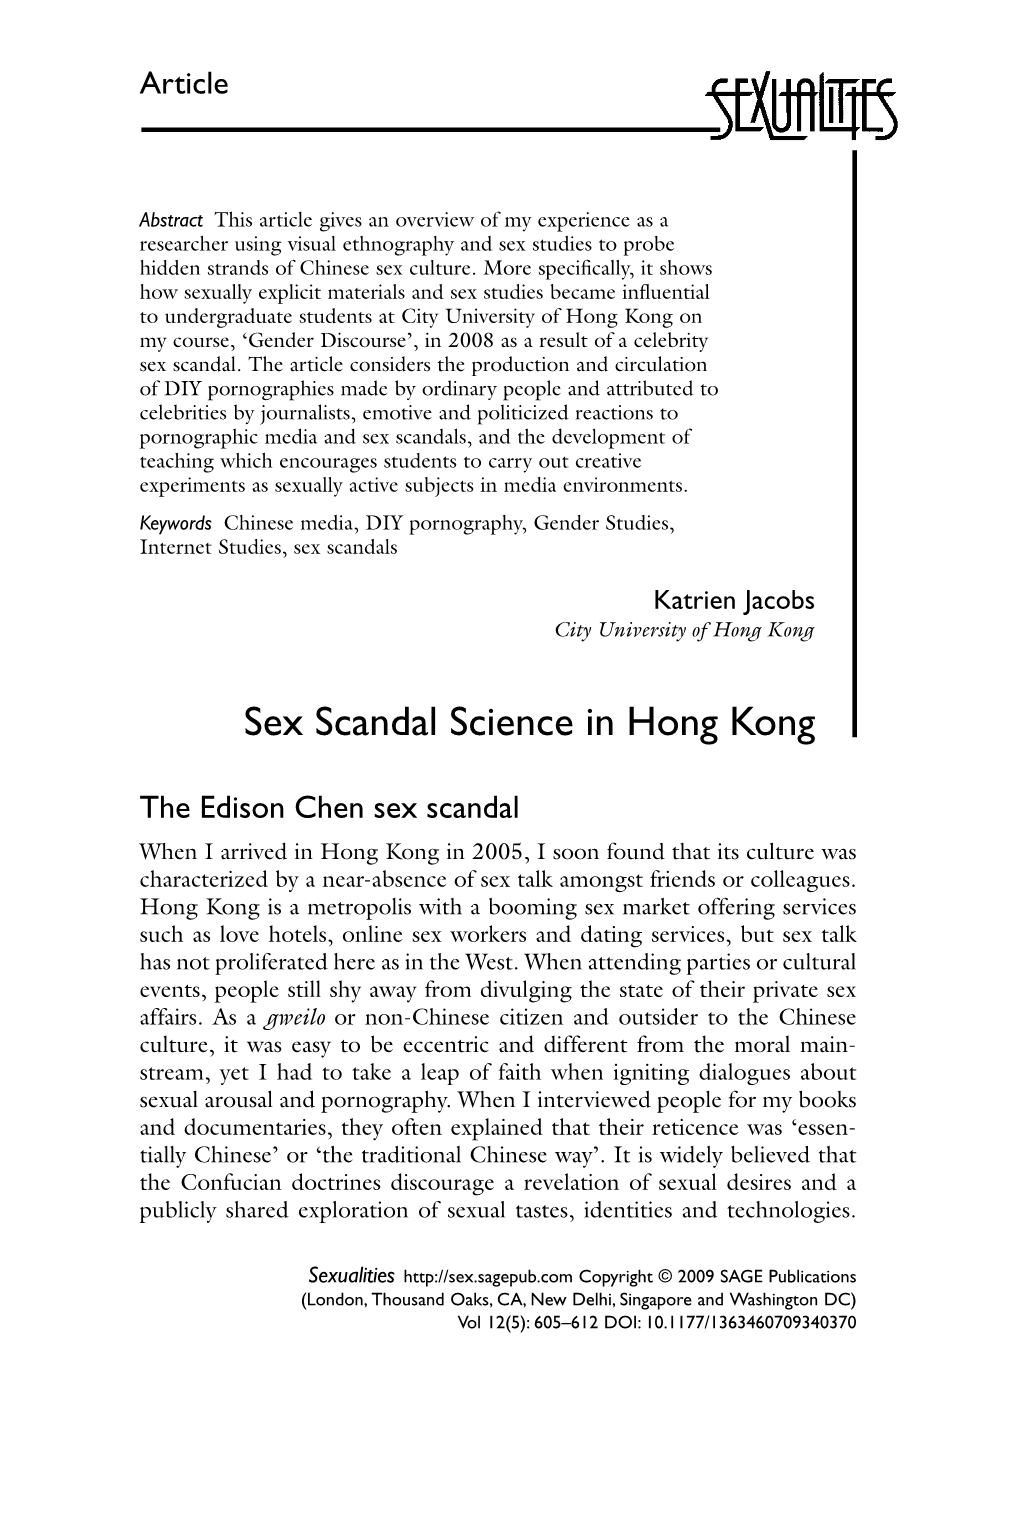 Sex Scandal Science in Hong Kong